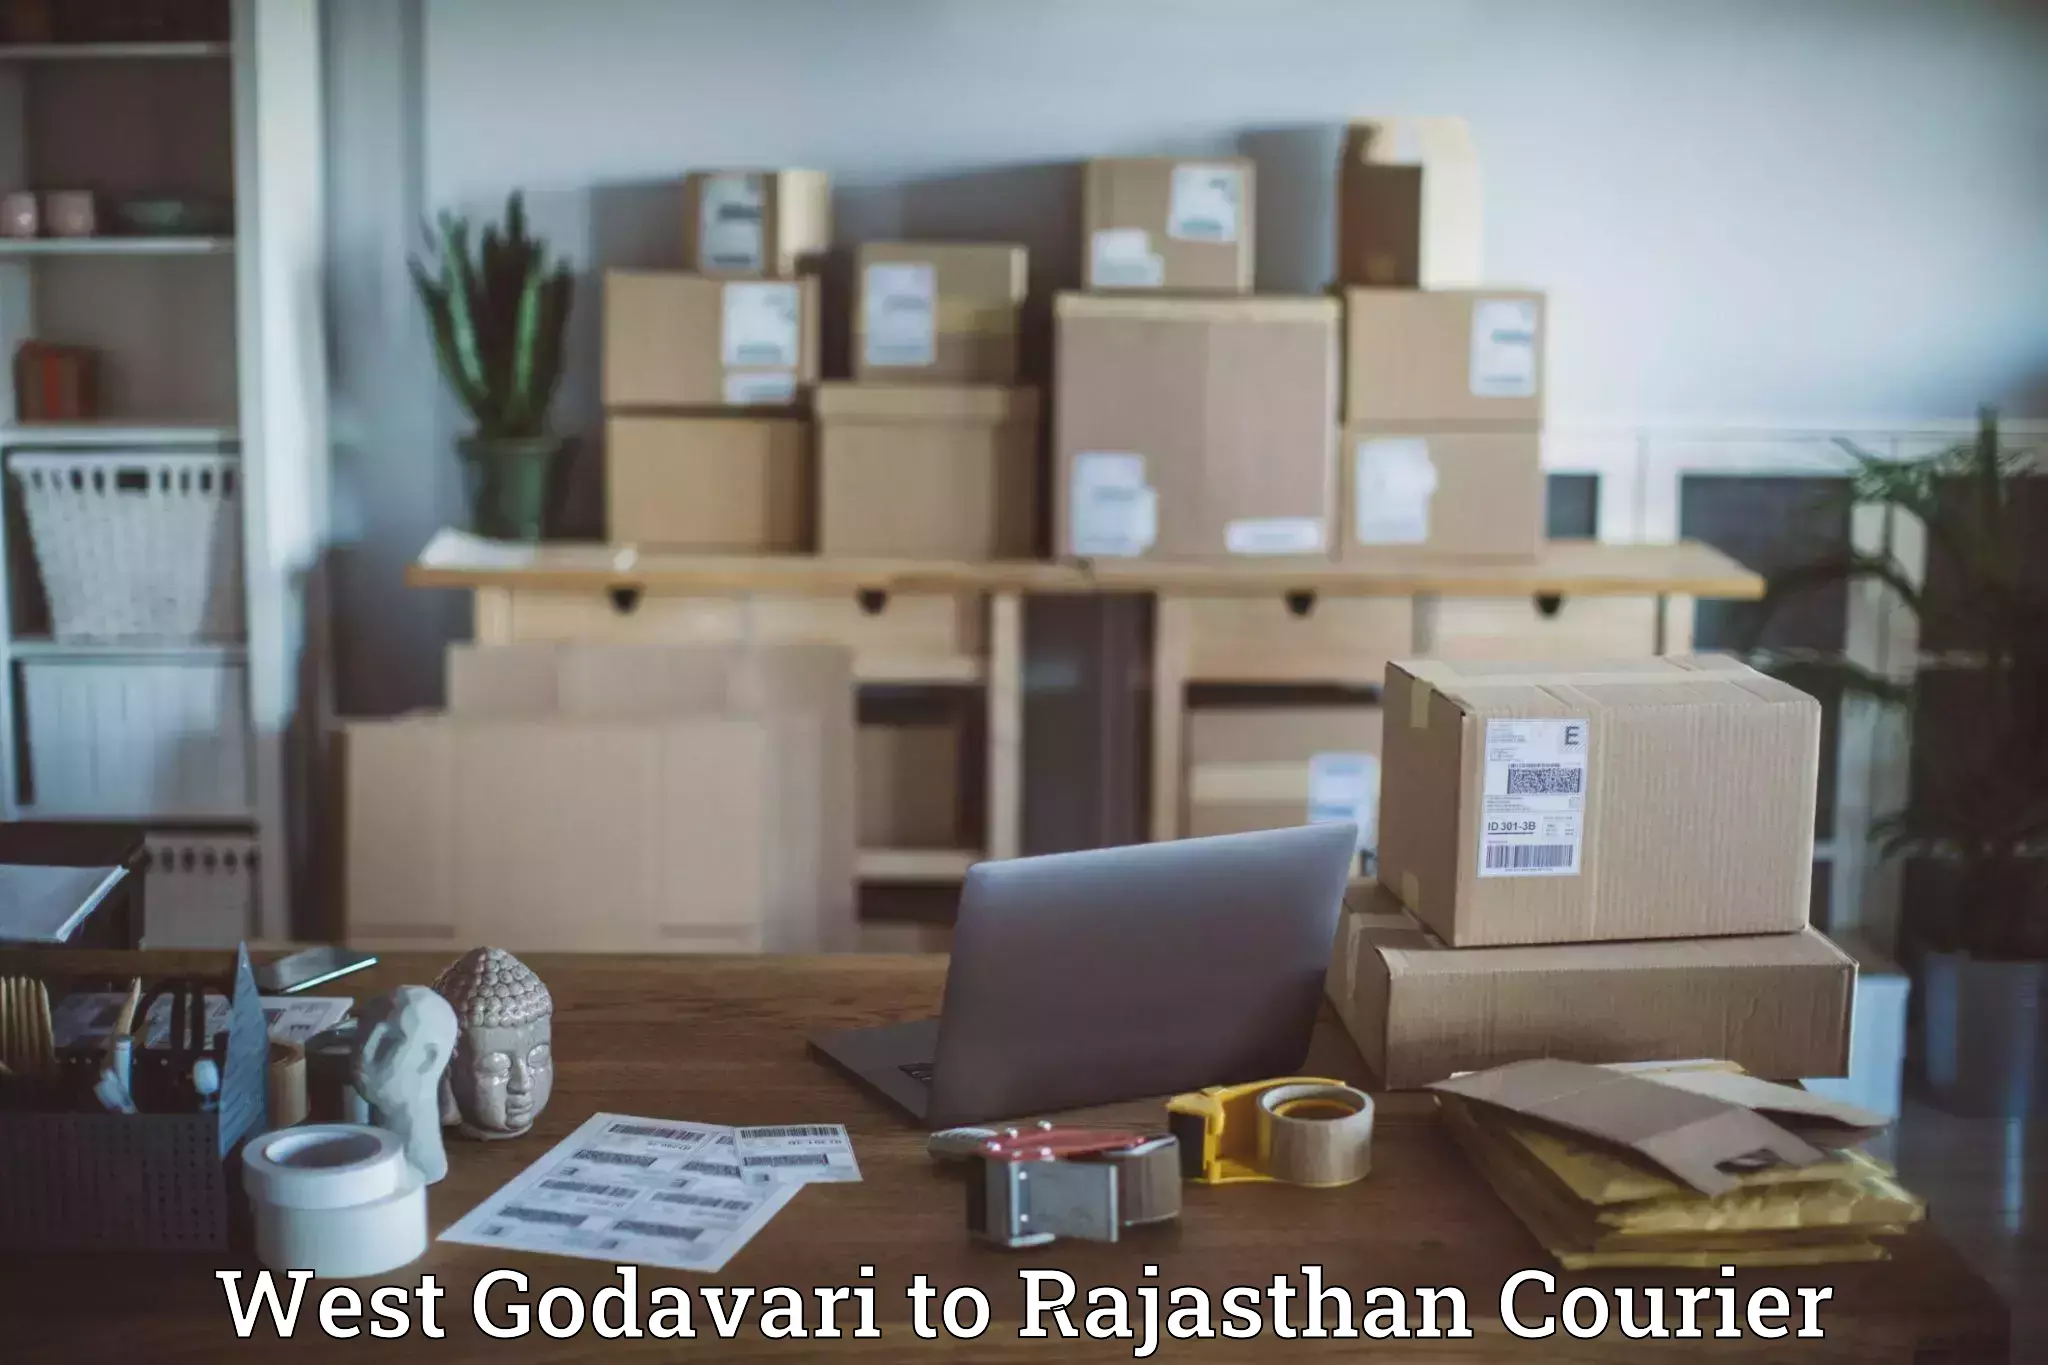 Express mail service West Godavari to Rajasthan